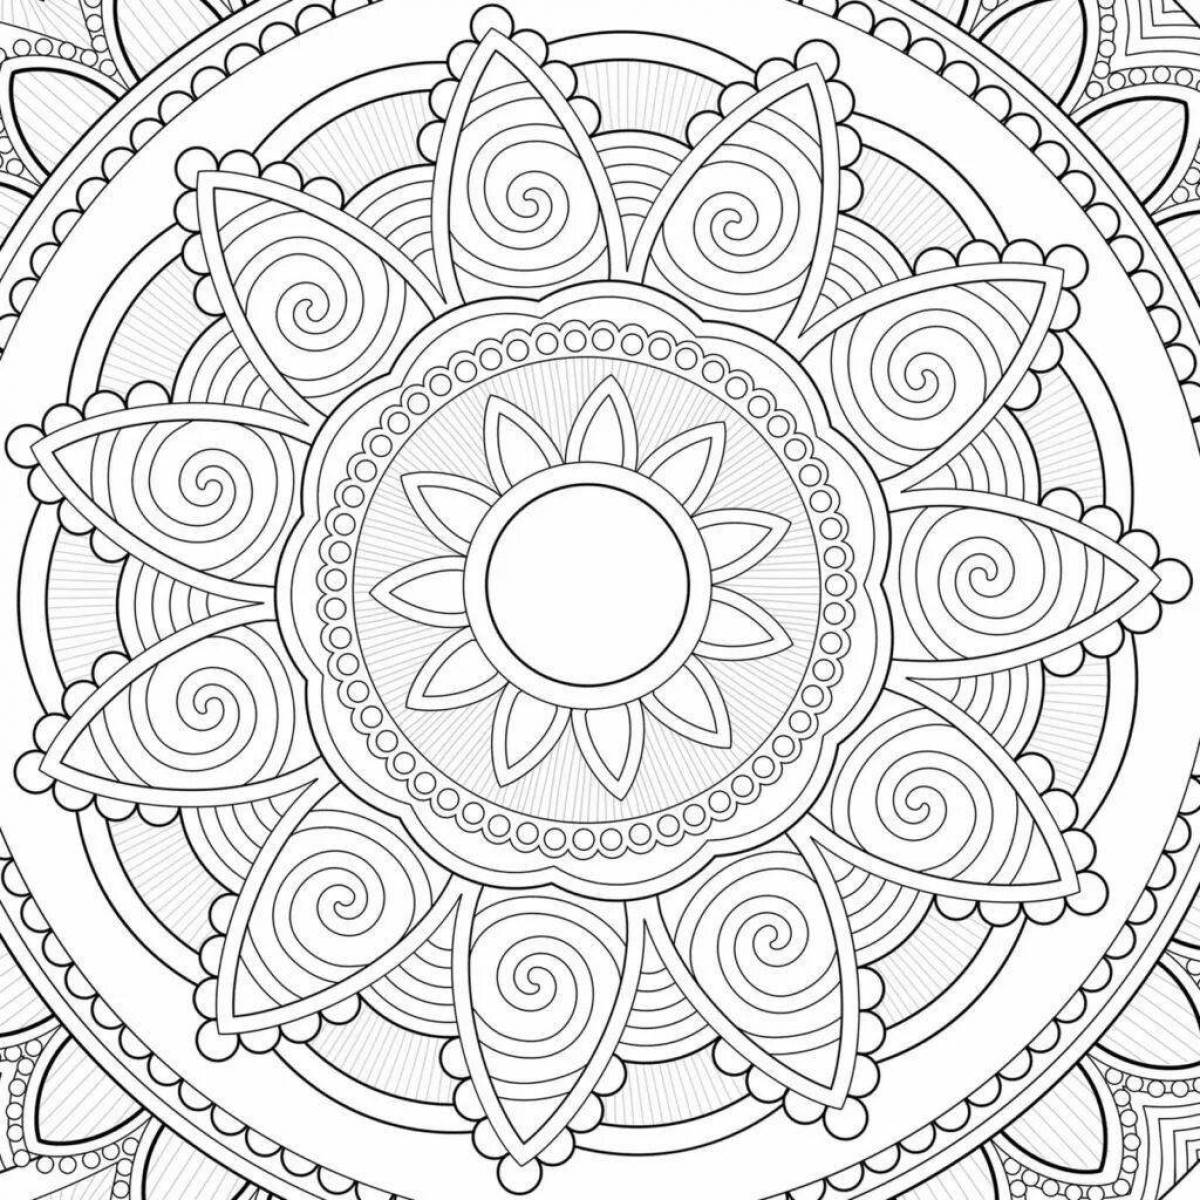 Bright health and wellness mandala coloring page